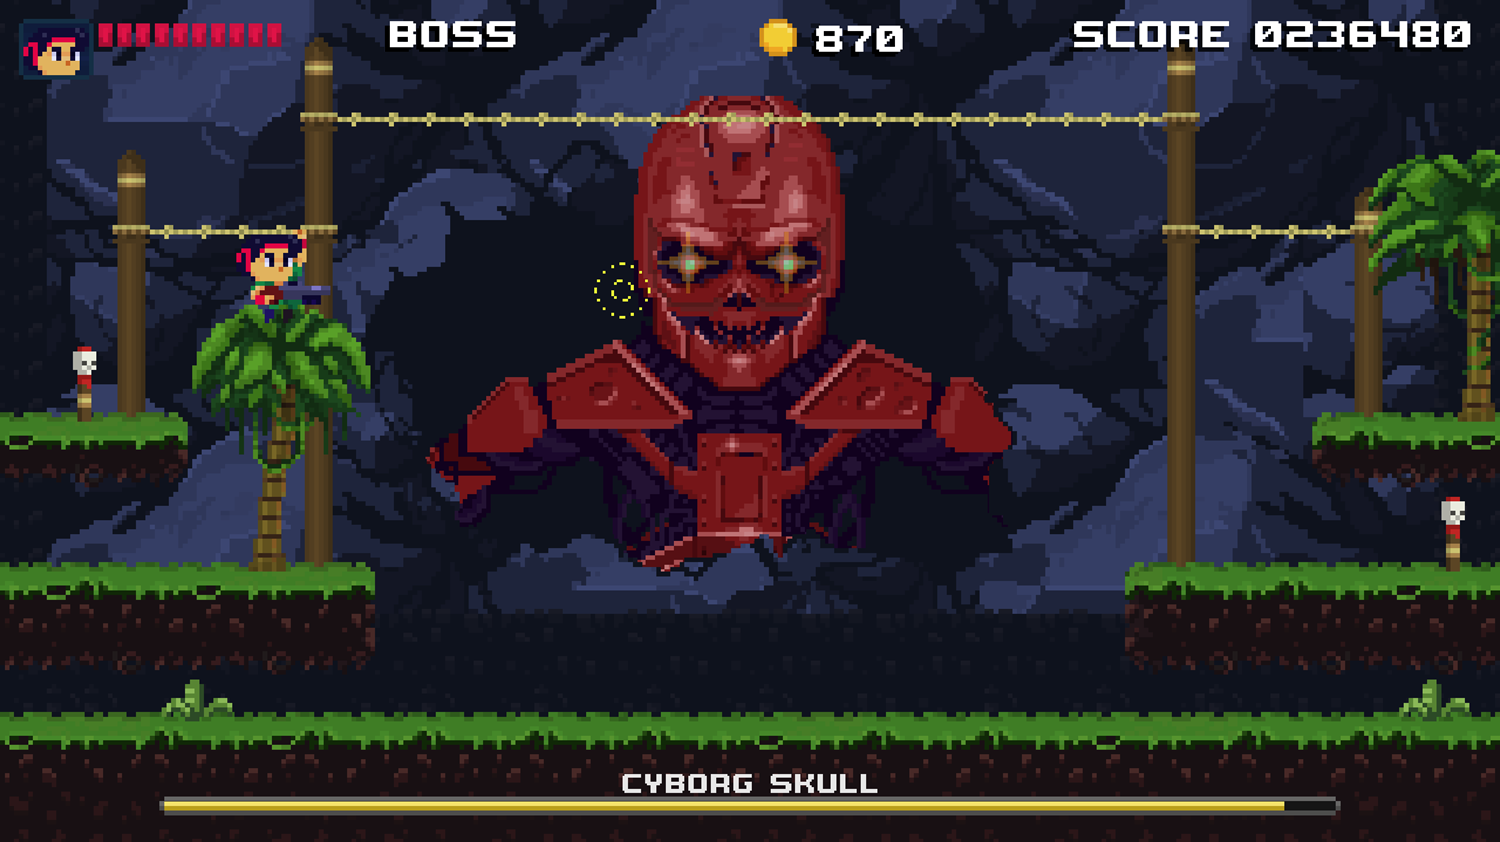 Brave Soldier Invasion of Cyborgs Game Cyborg Skull Attack Warning Screenshot.